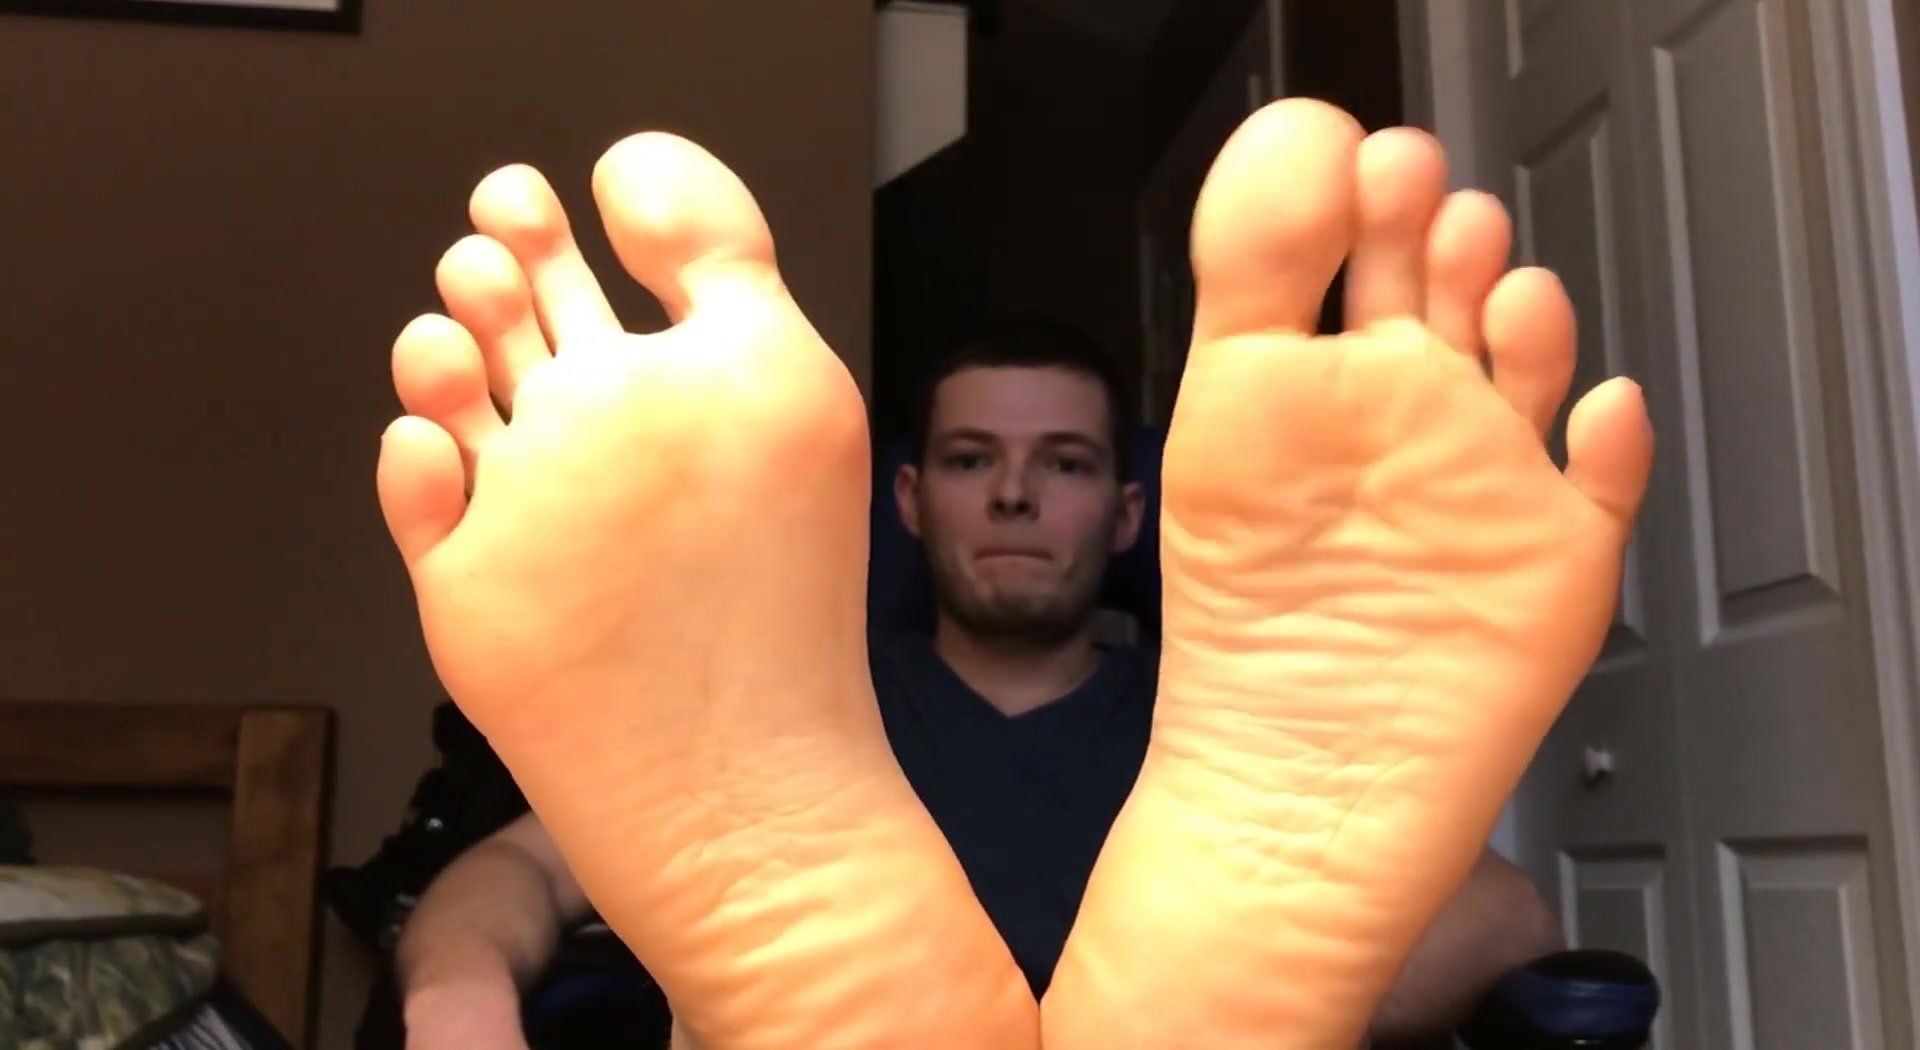 Jake Puts Up His Feet